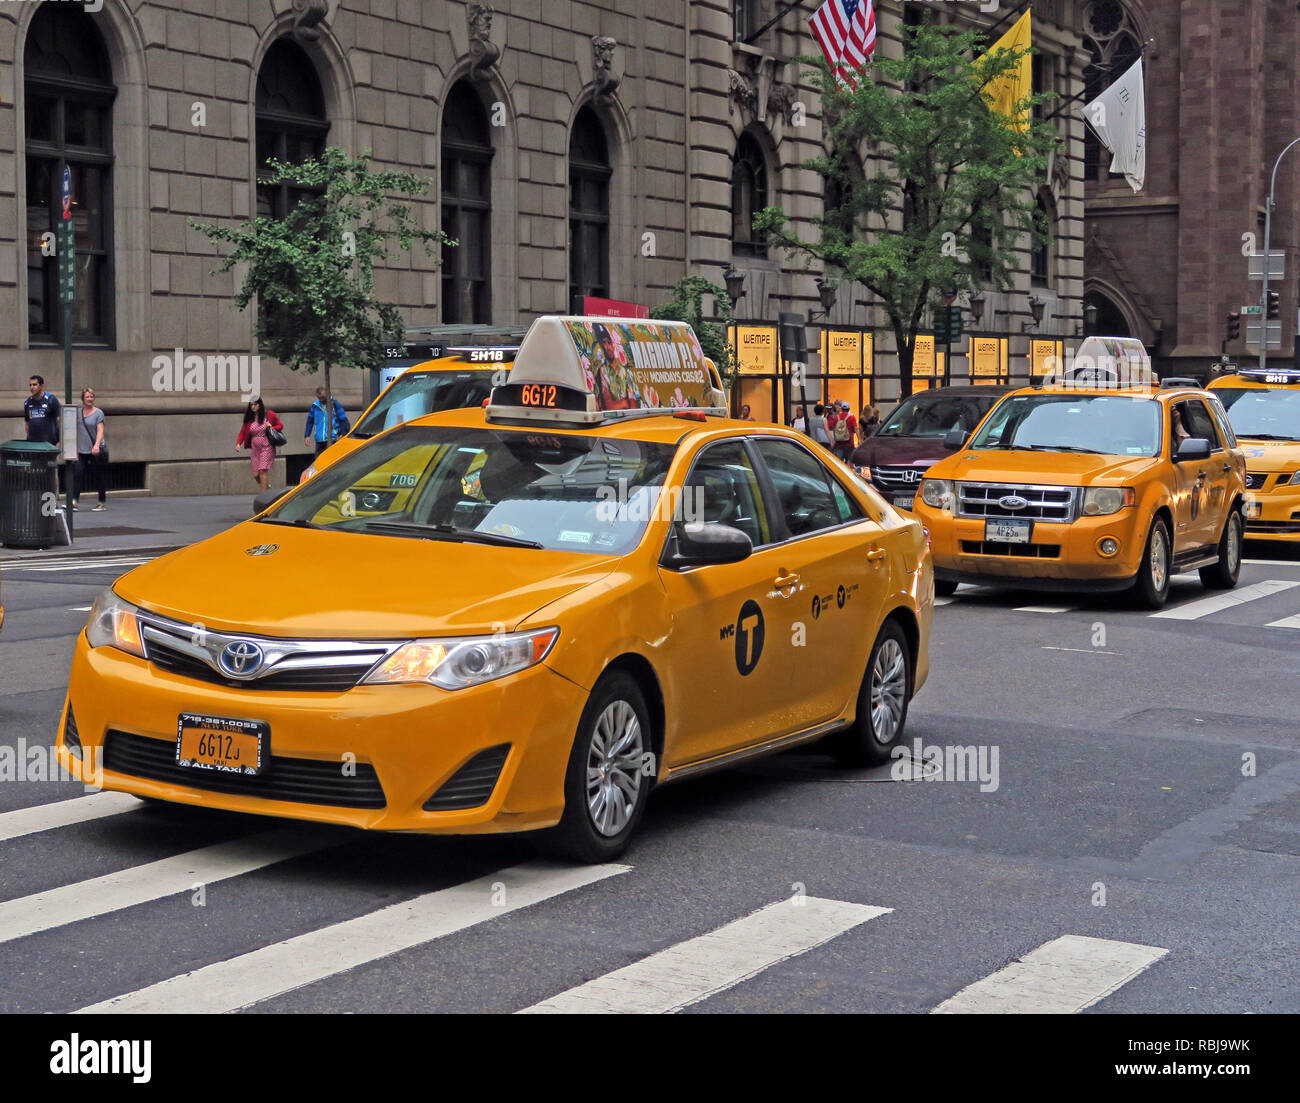 Médaillon jaune canari New York taxi, location caravane, Manhattan, New York, NY, USA Banque D'Images